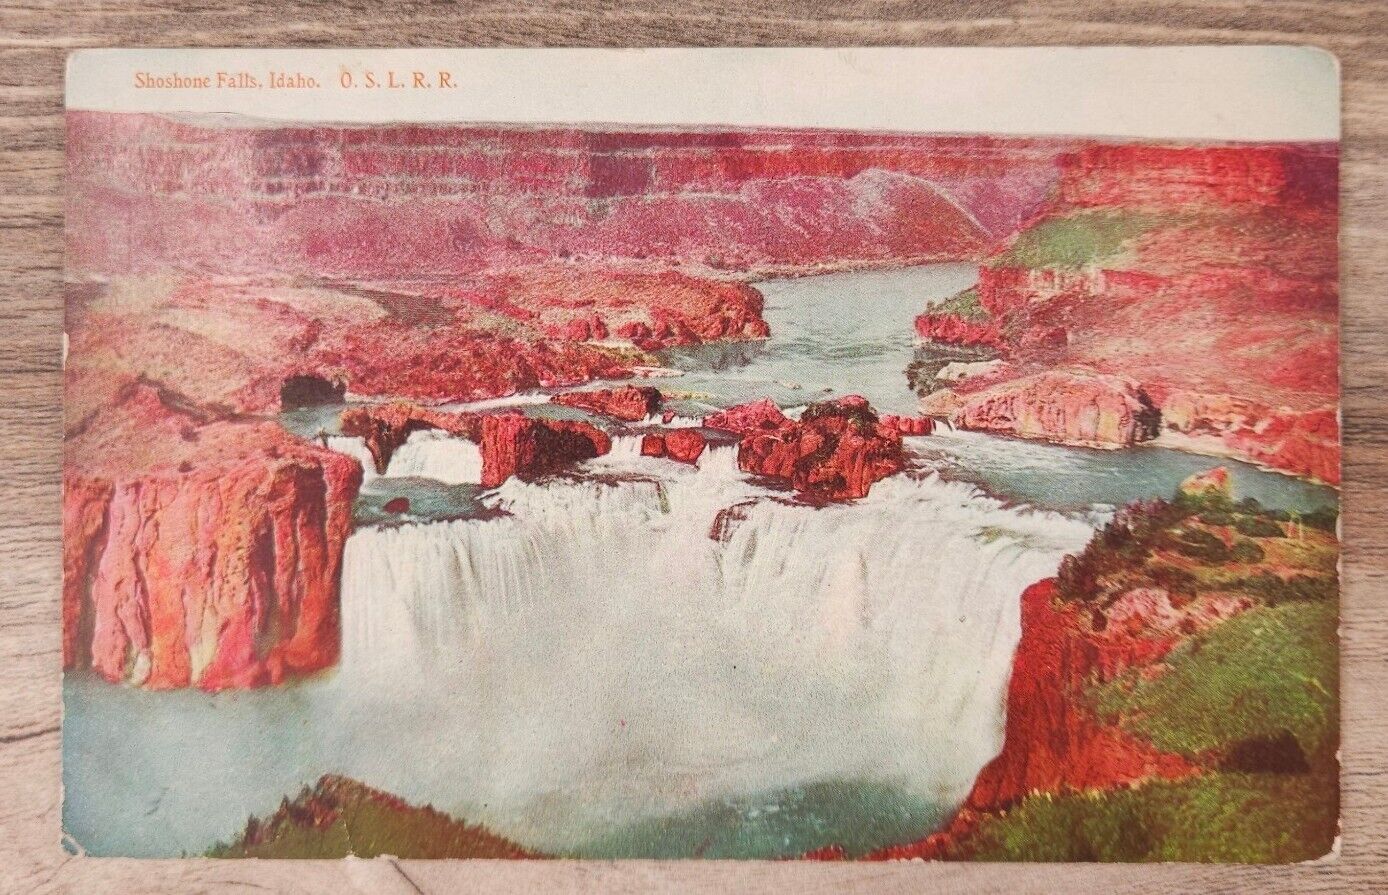 Shoshone Falls Idaho OSLRR Scenic  Postcard